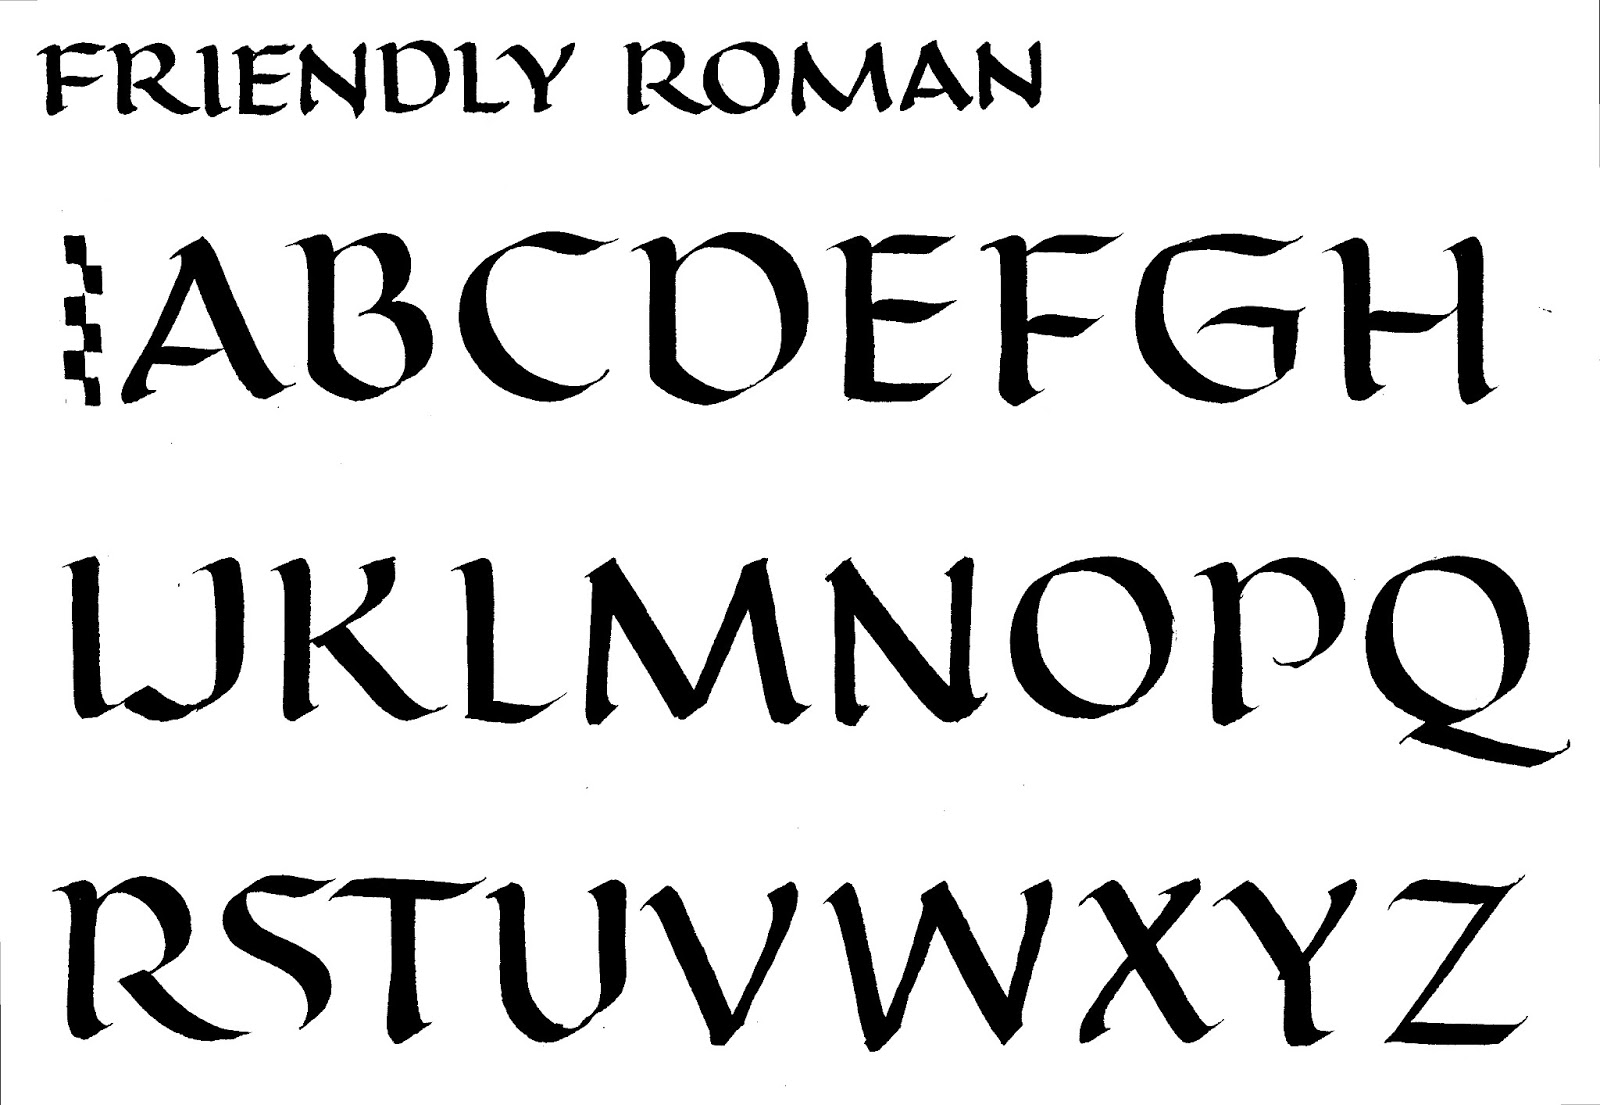 Шрифт roman обычный. Римский шрифт. Романский шрифт. Римские буквы шрифт. Древнеримский шрифт.